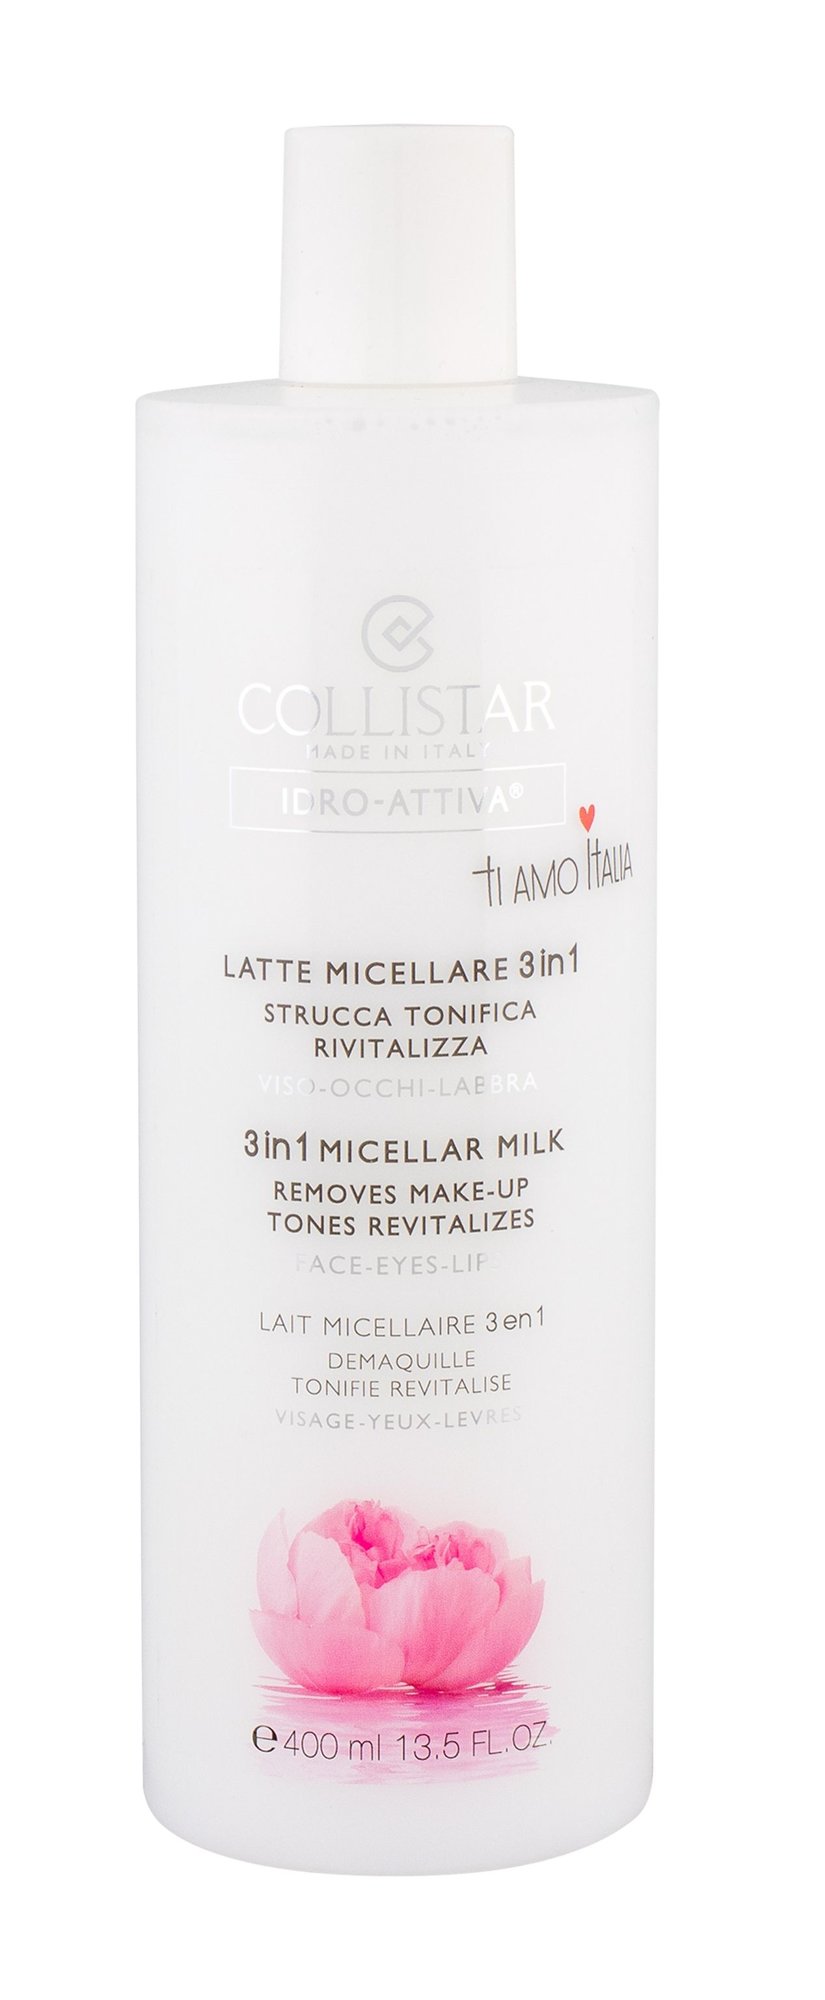 Collistar Idro-Attiva 3in1 Micellar Milk veido pienelis 